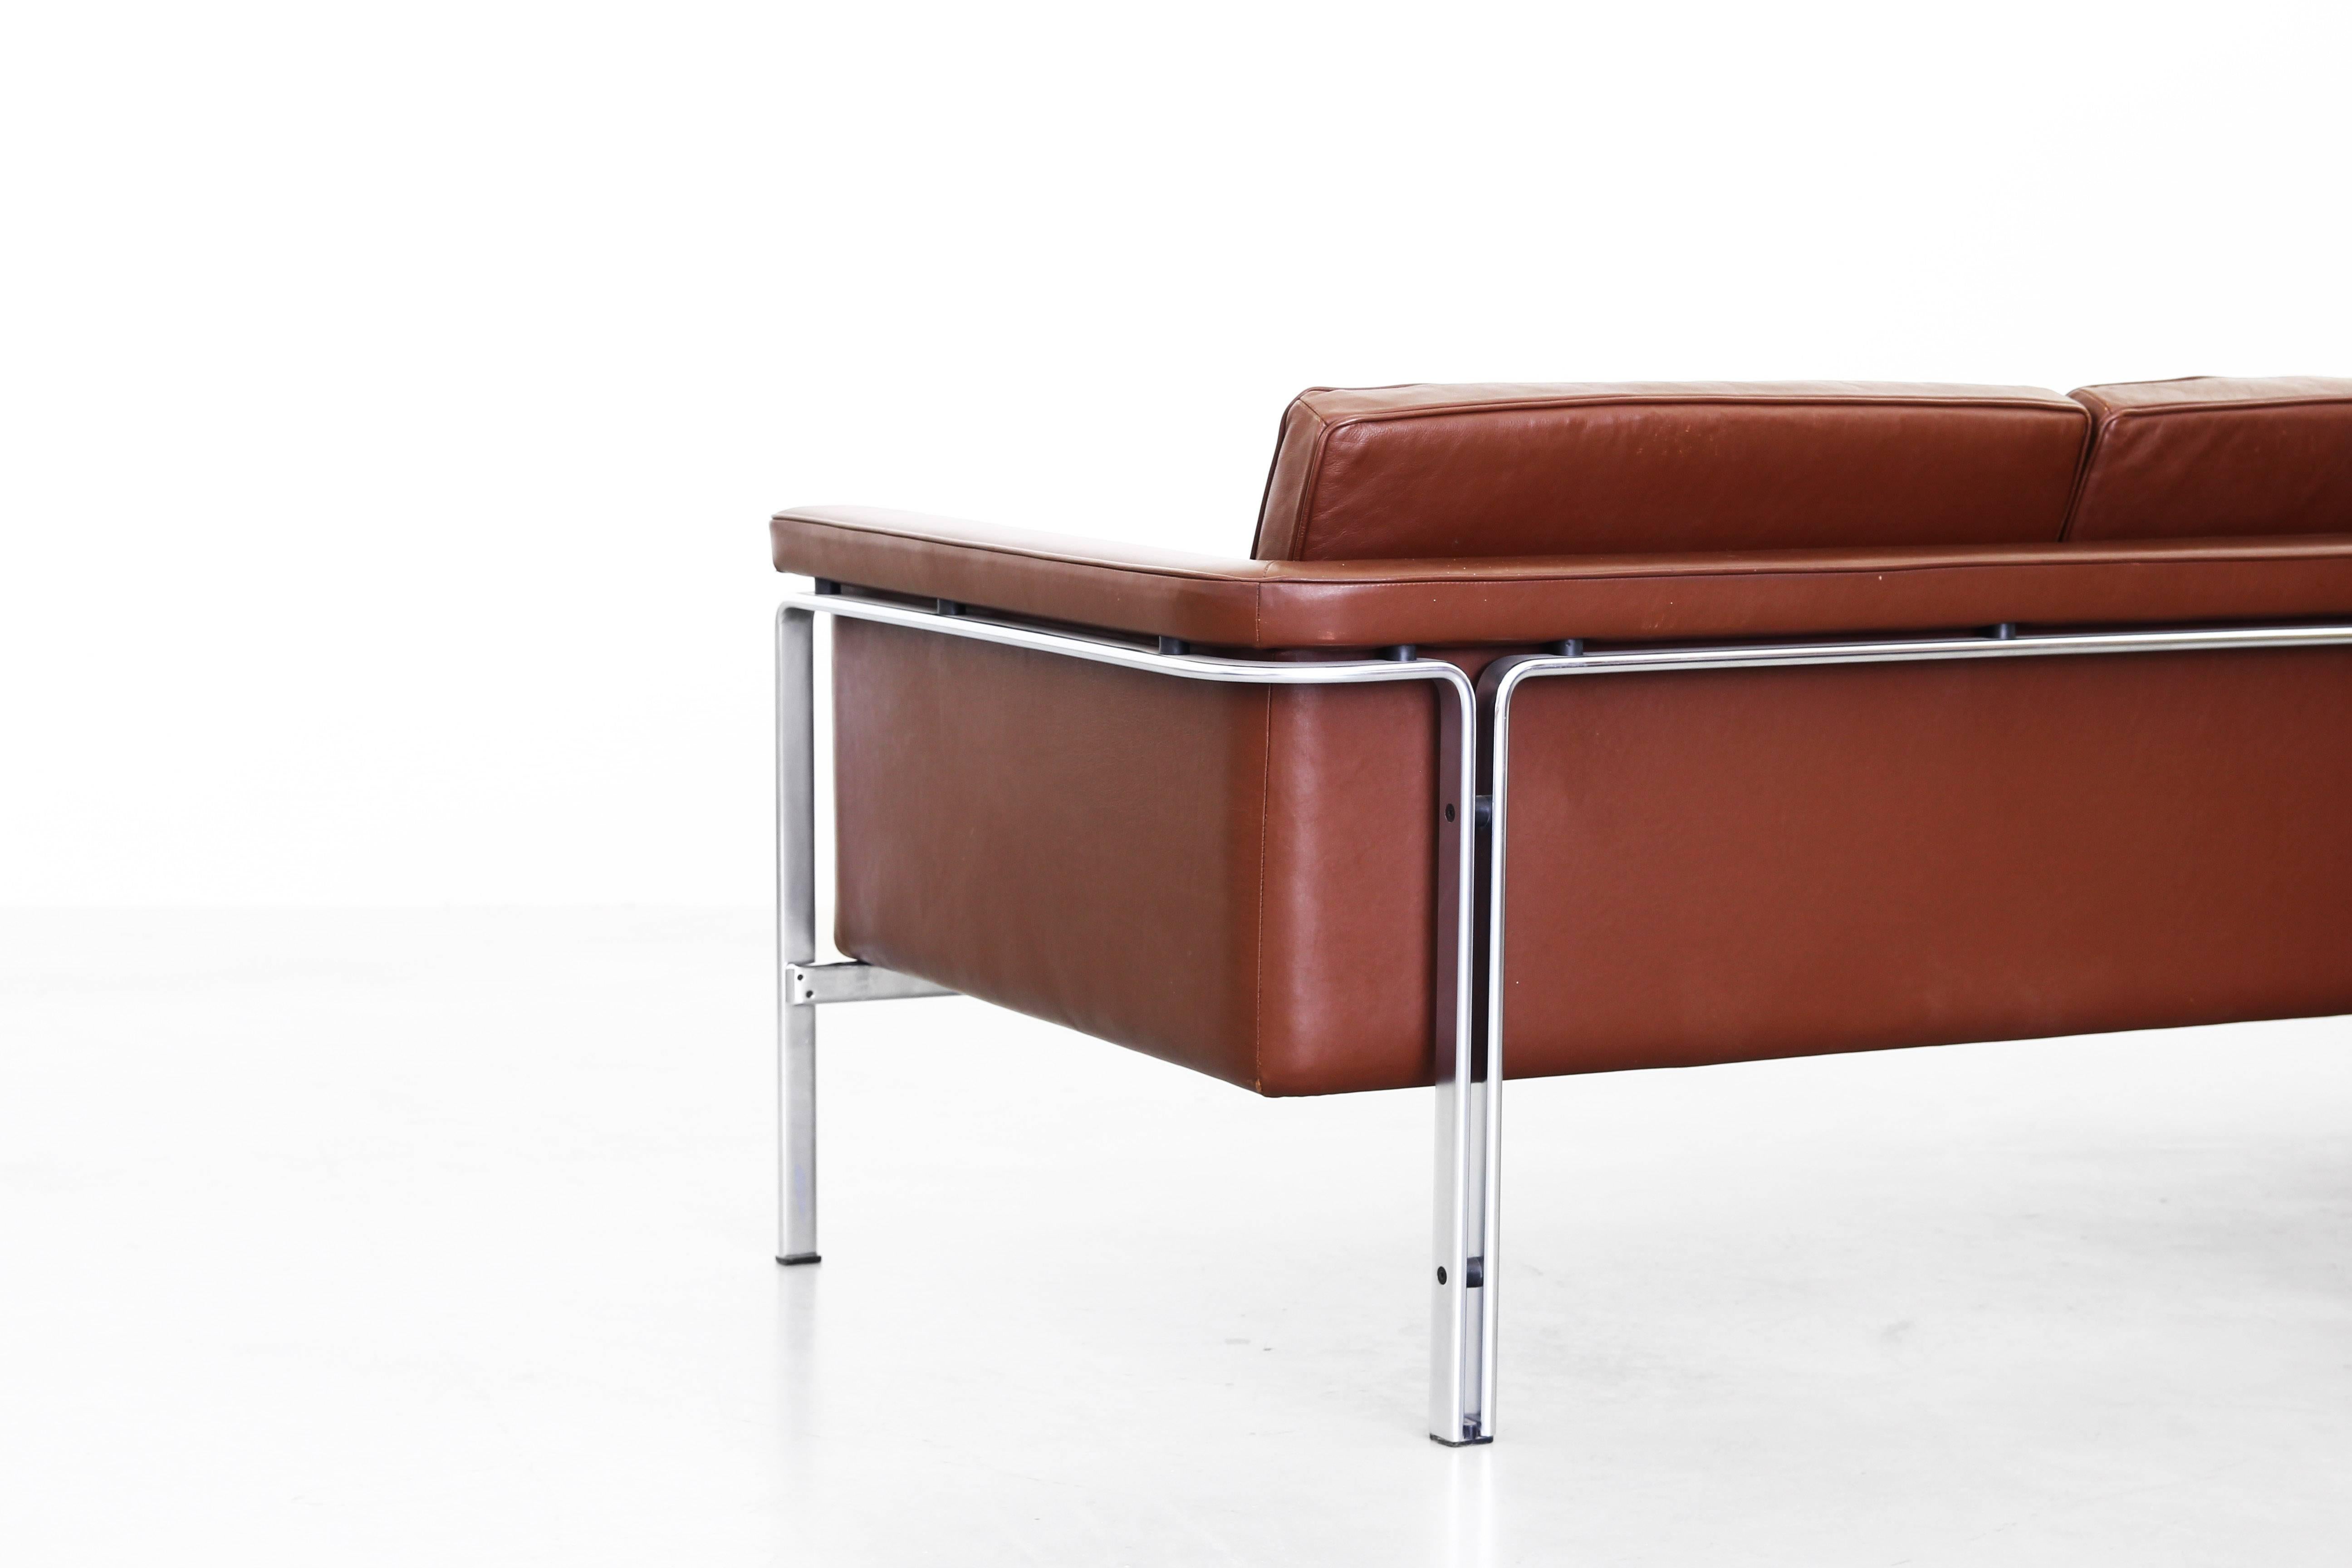 Sofa by Horst Bruning for Alfred Kill International Leather, 1968 (20. Jahrhundert)